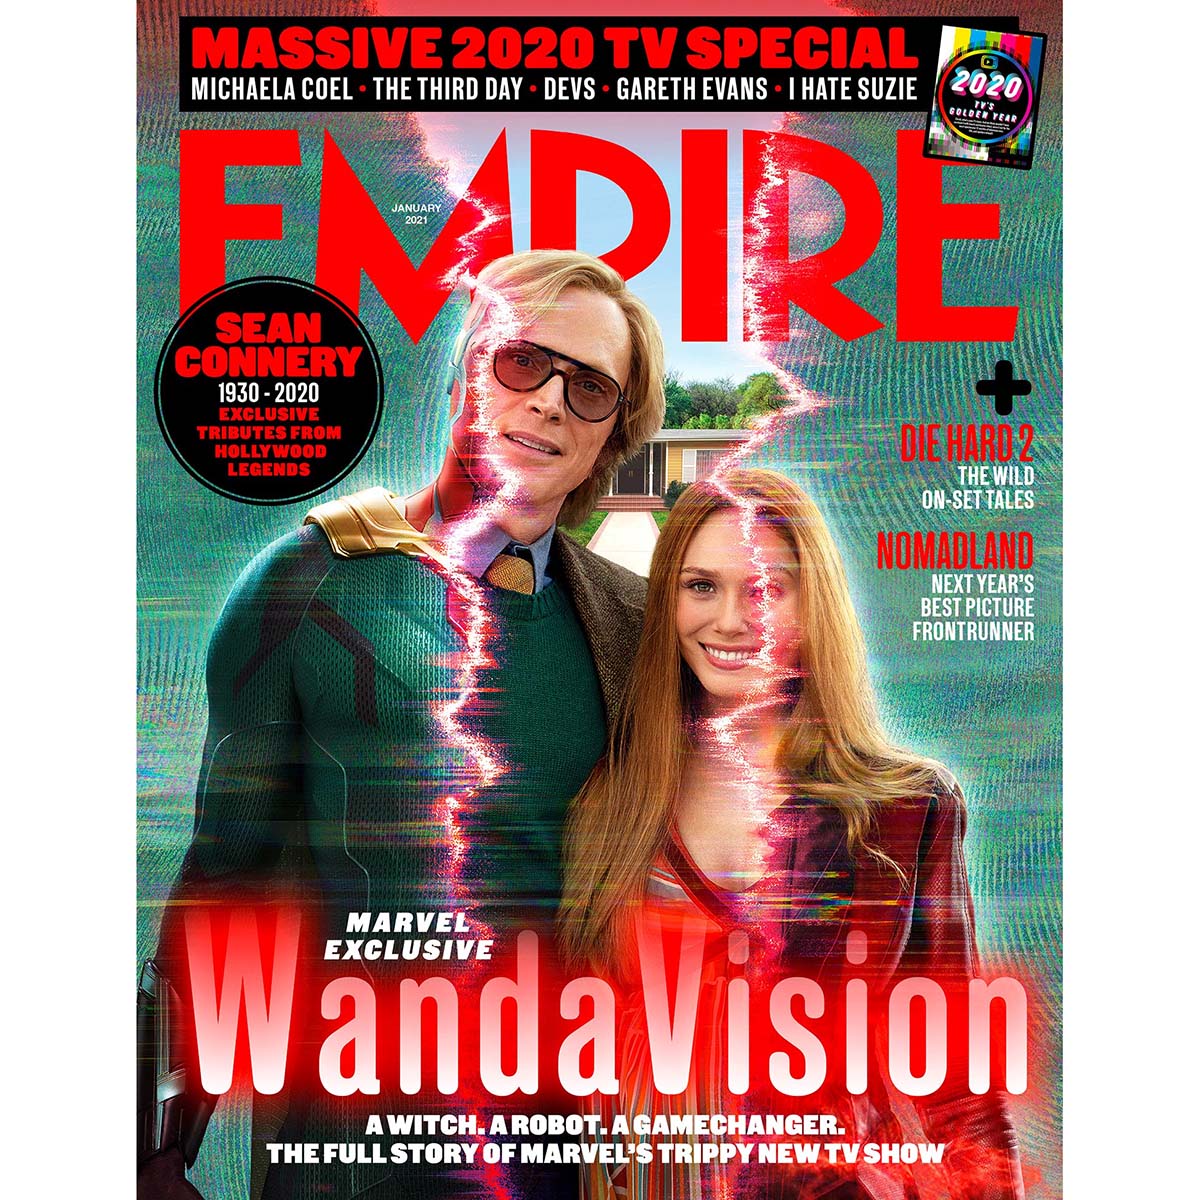 Empire Magazine Issue 383 (January 2021) Wanda Vision